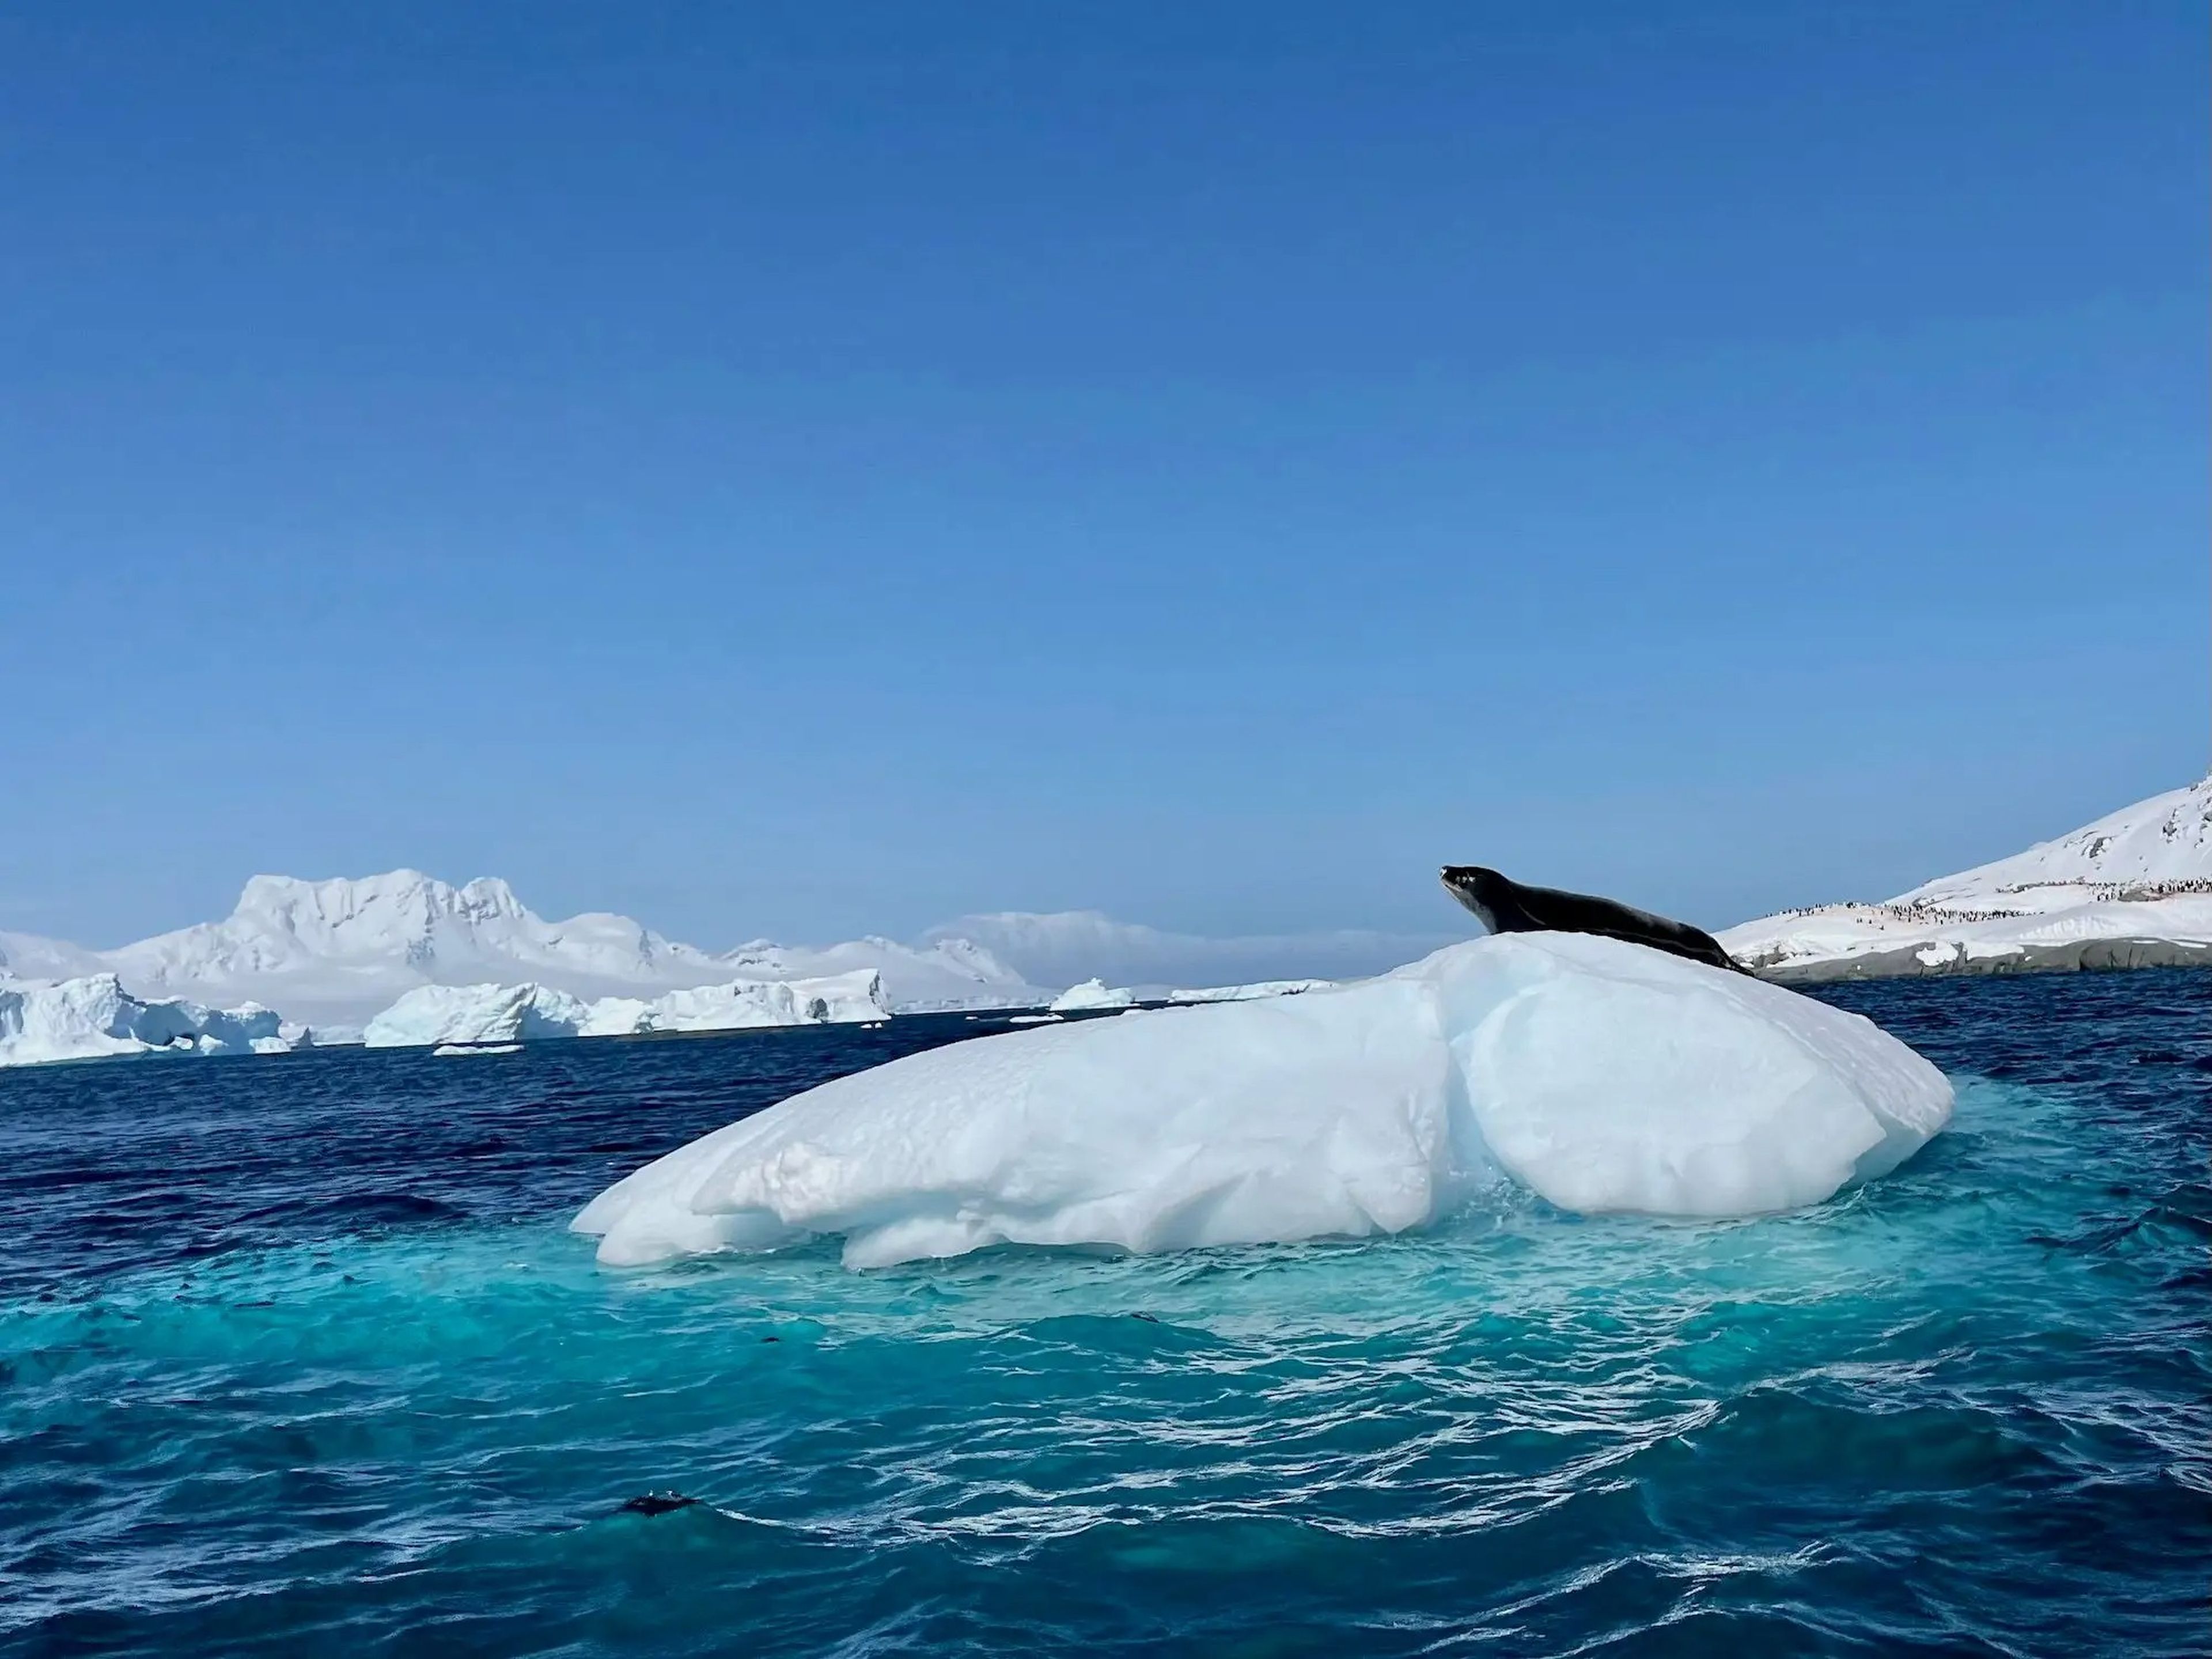 A seal sitting on an iceberg.